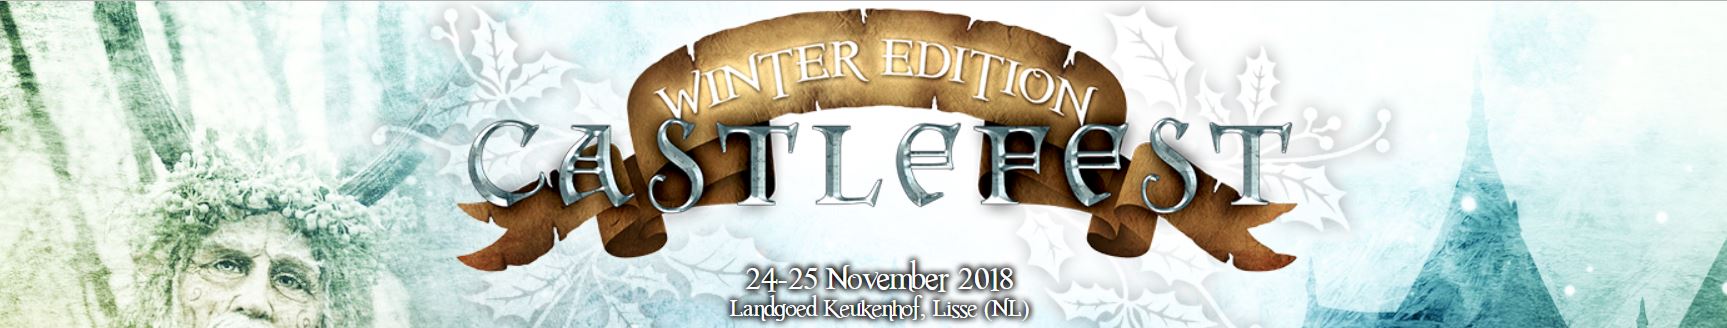 Castlefest 2018 Winter Edition banner